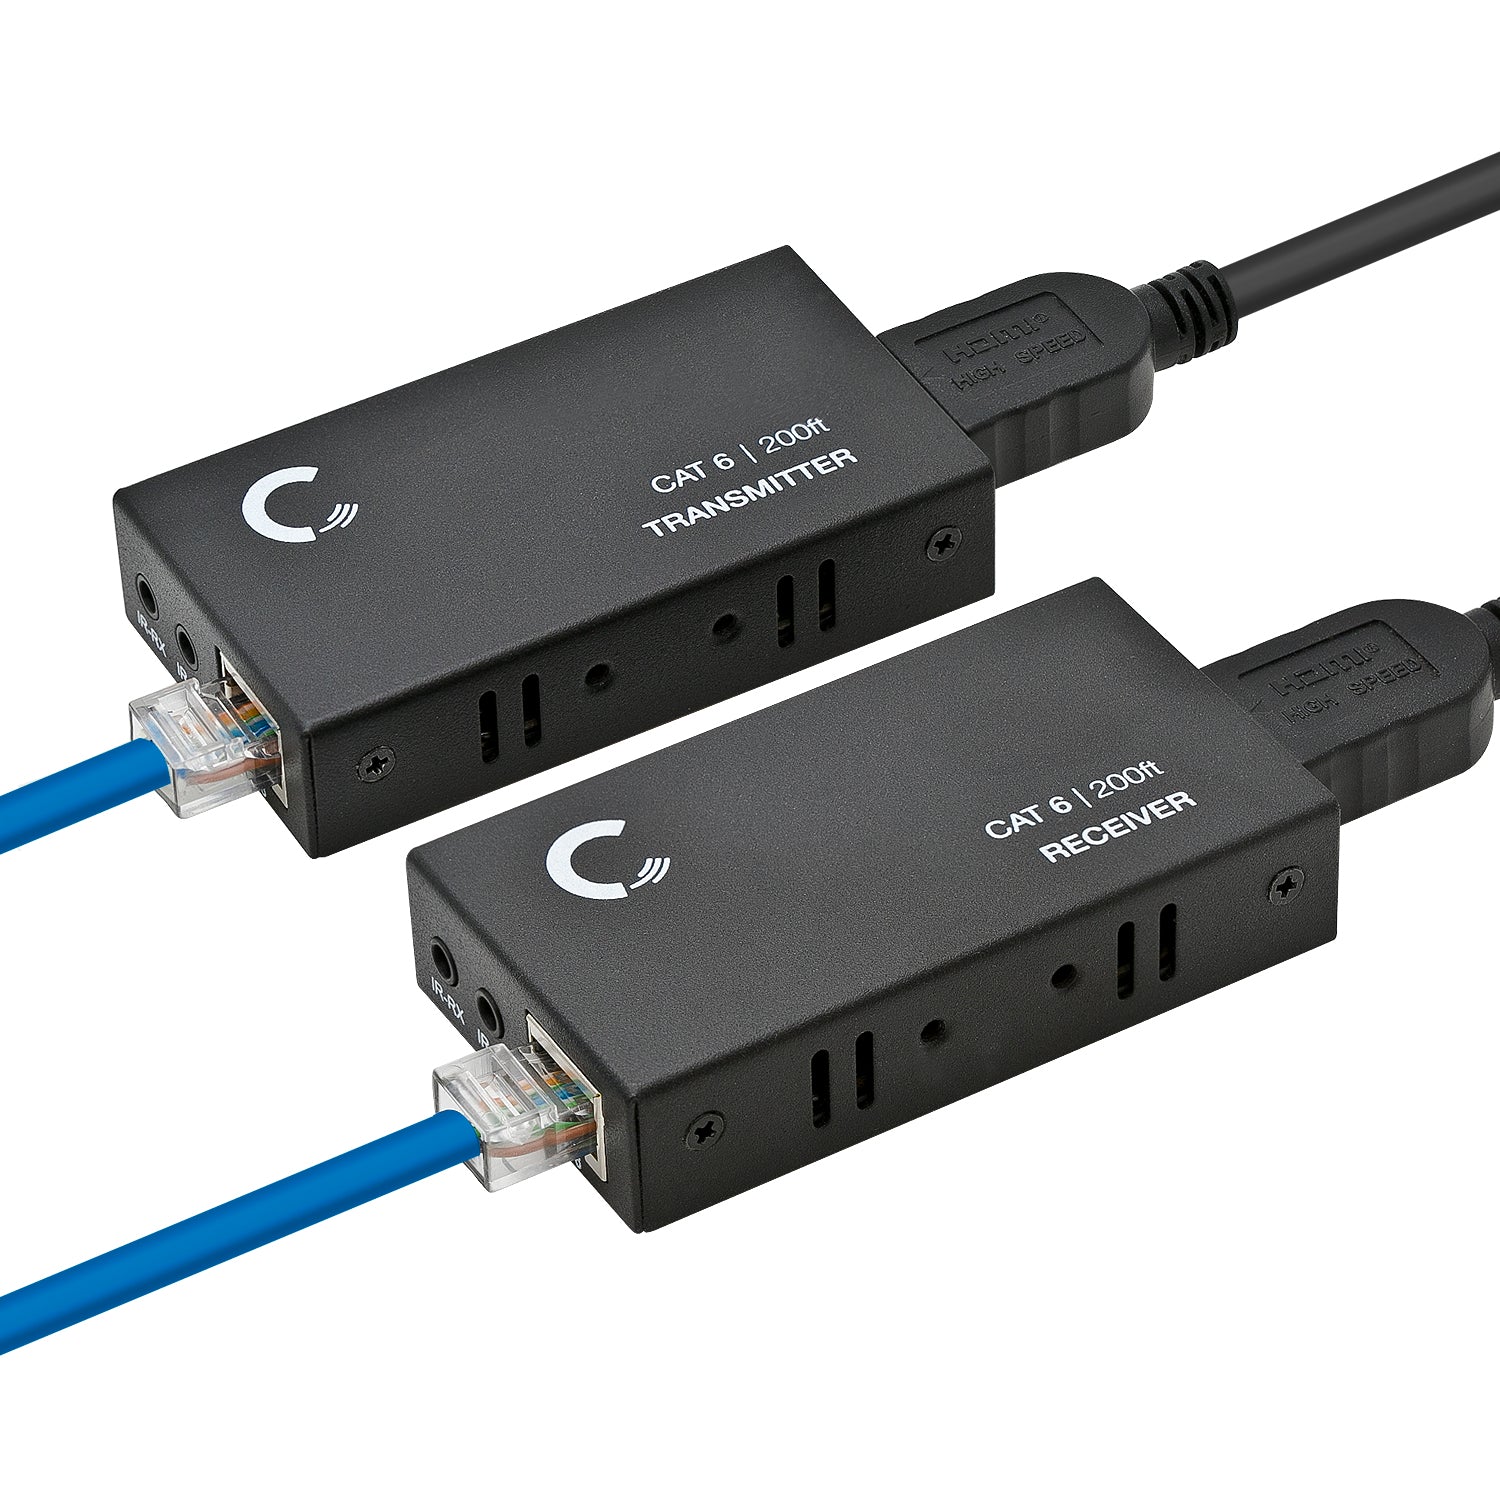 Extensor HDMI Vía Ethernet Transmisor y Receptor TrauTech 30mts